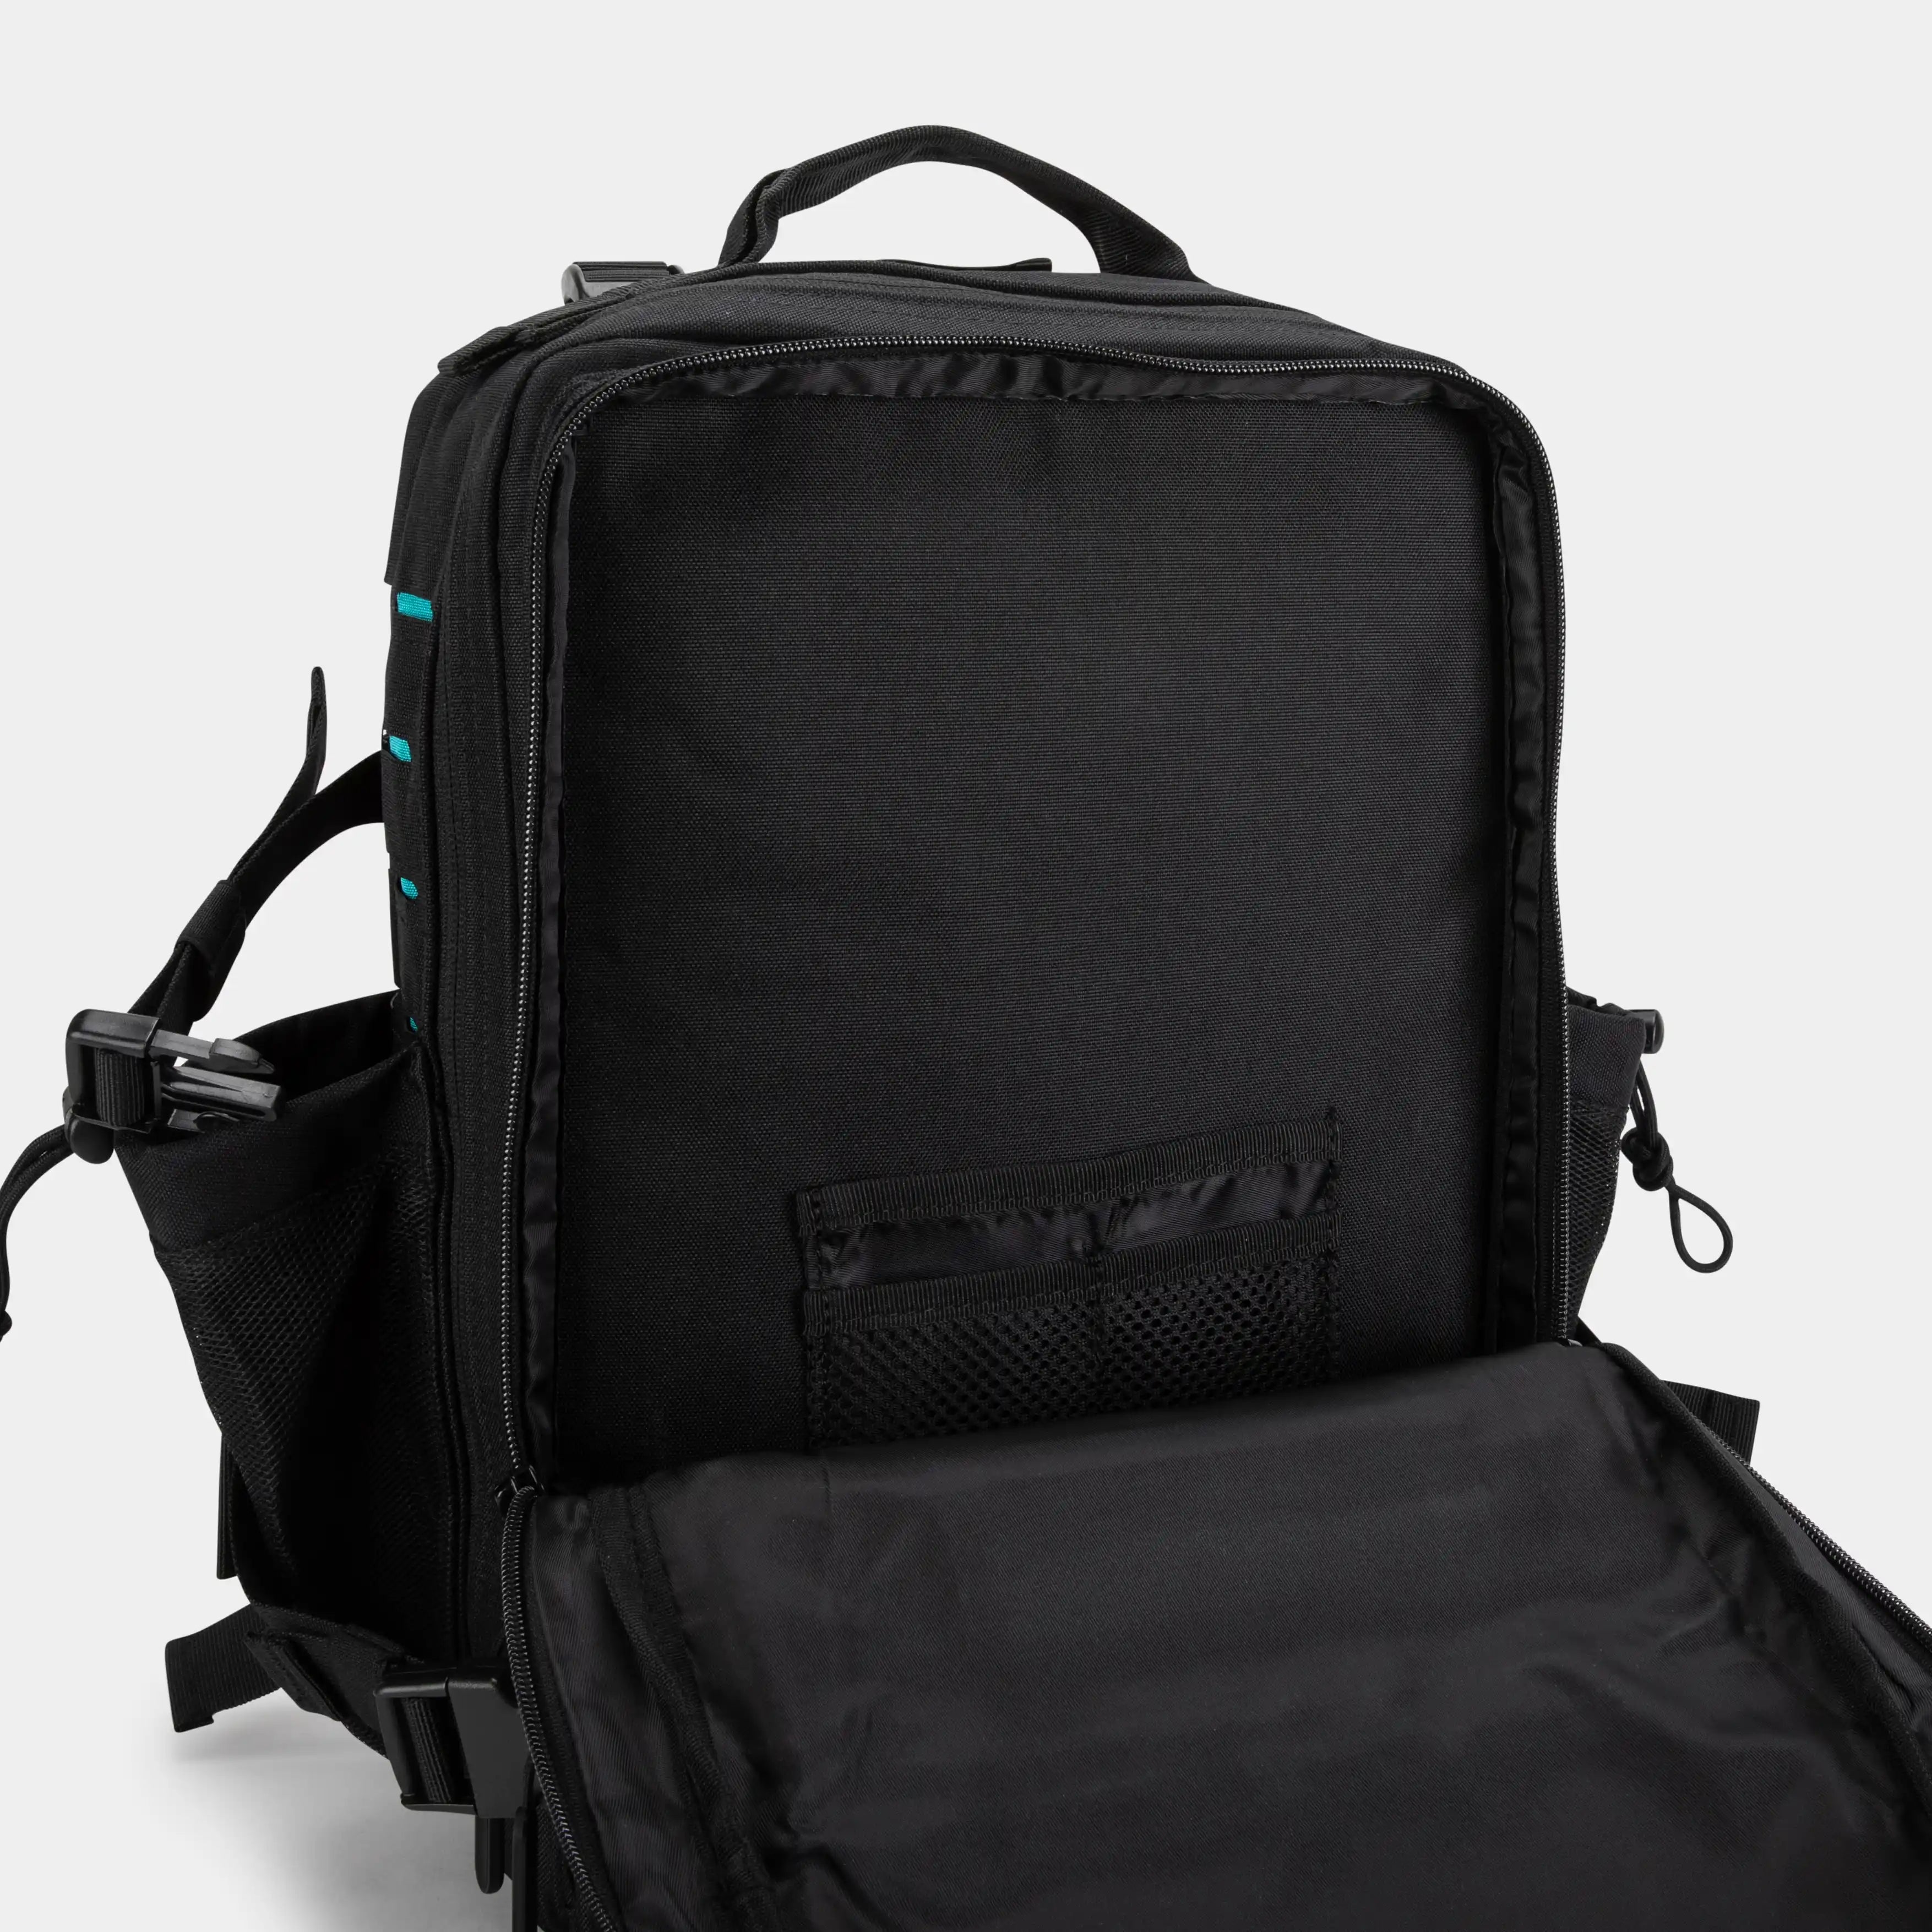 Built for Athletes Backpacks Small Black & Aqua Gym Backpack